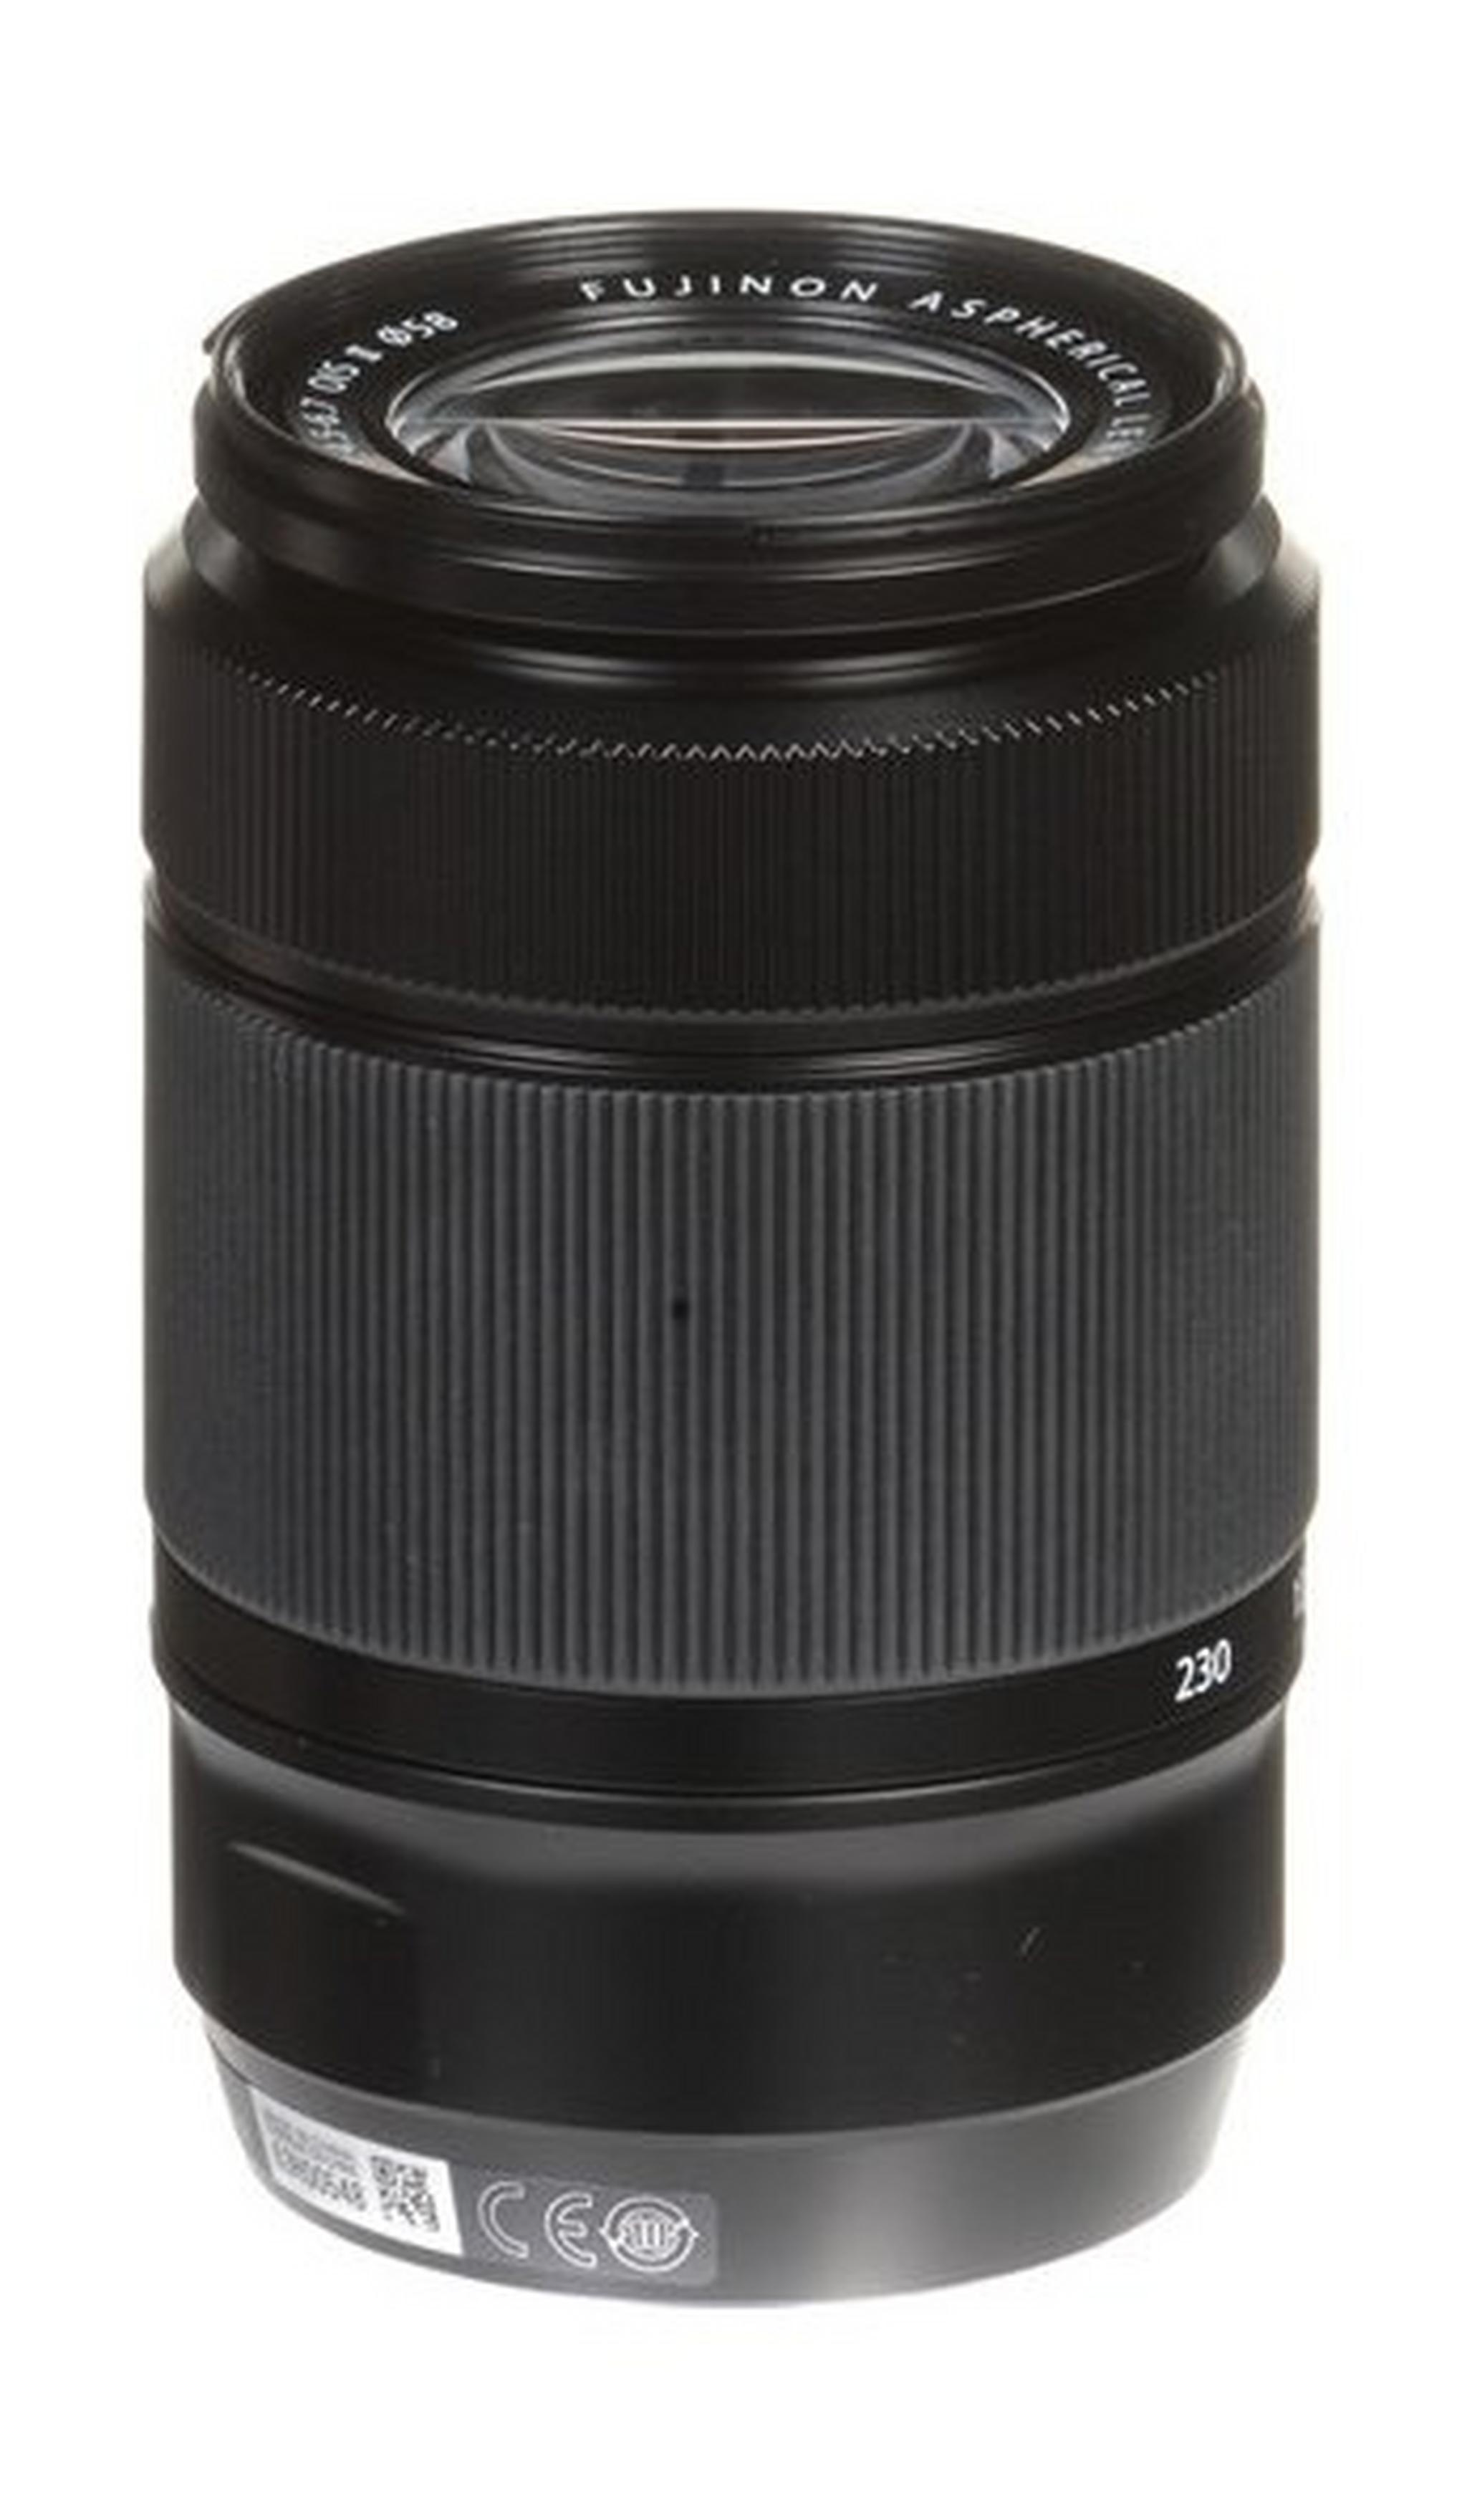 Fujifilm XC 50 230mm f/4.5-6.7 OIS II Lens - Black